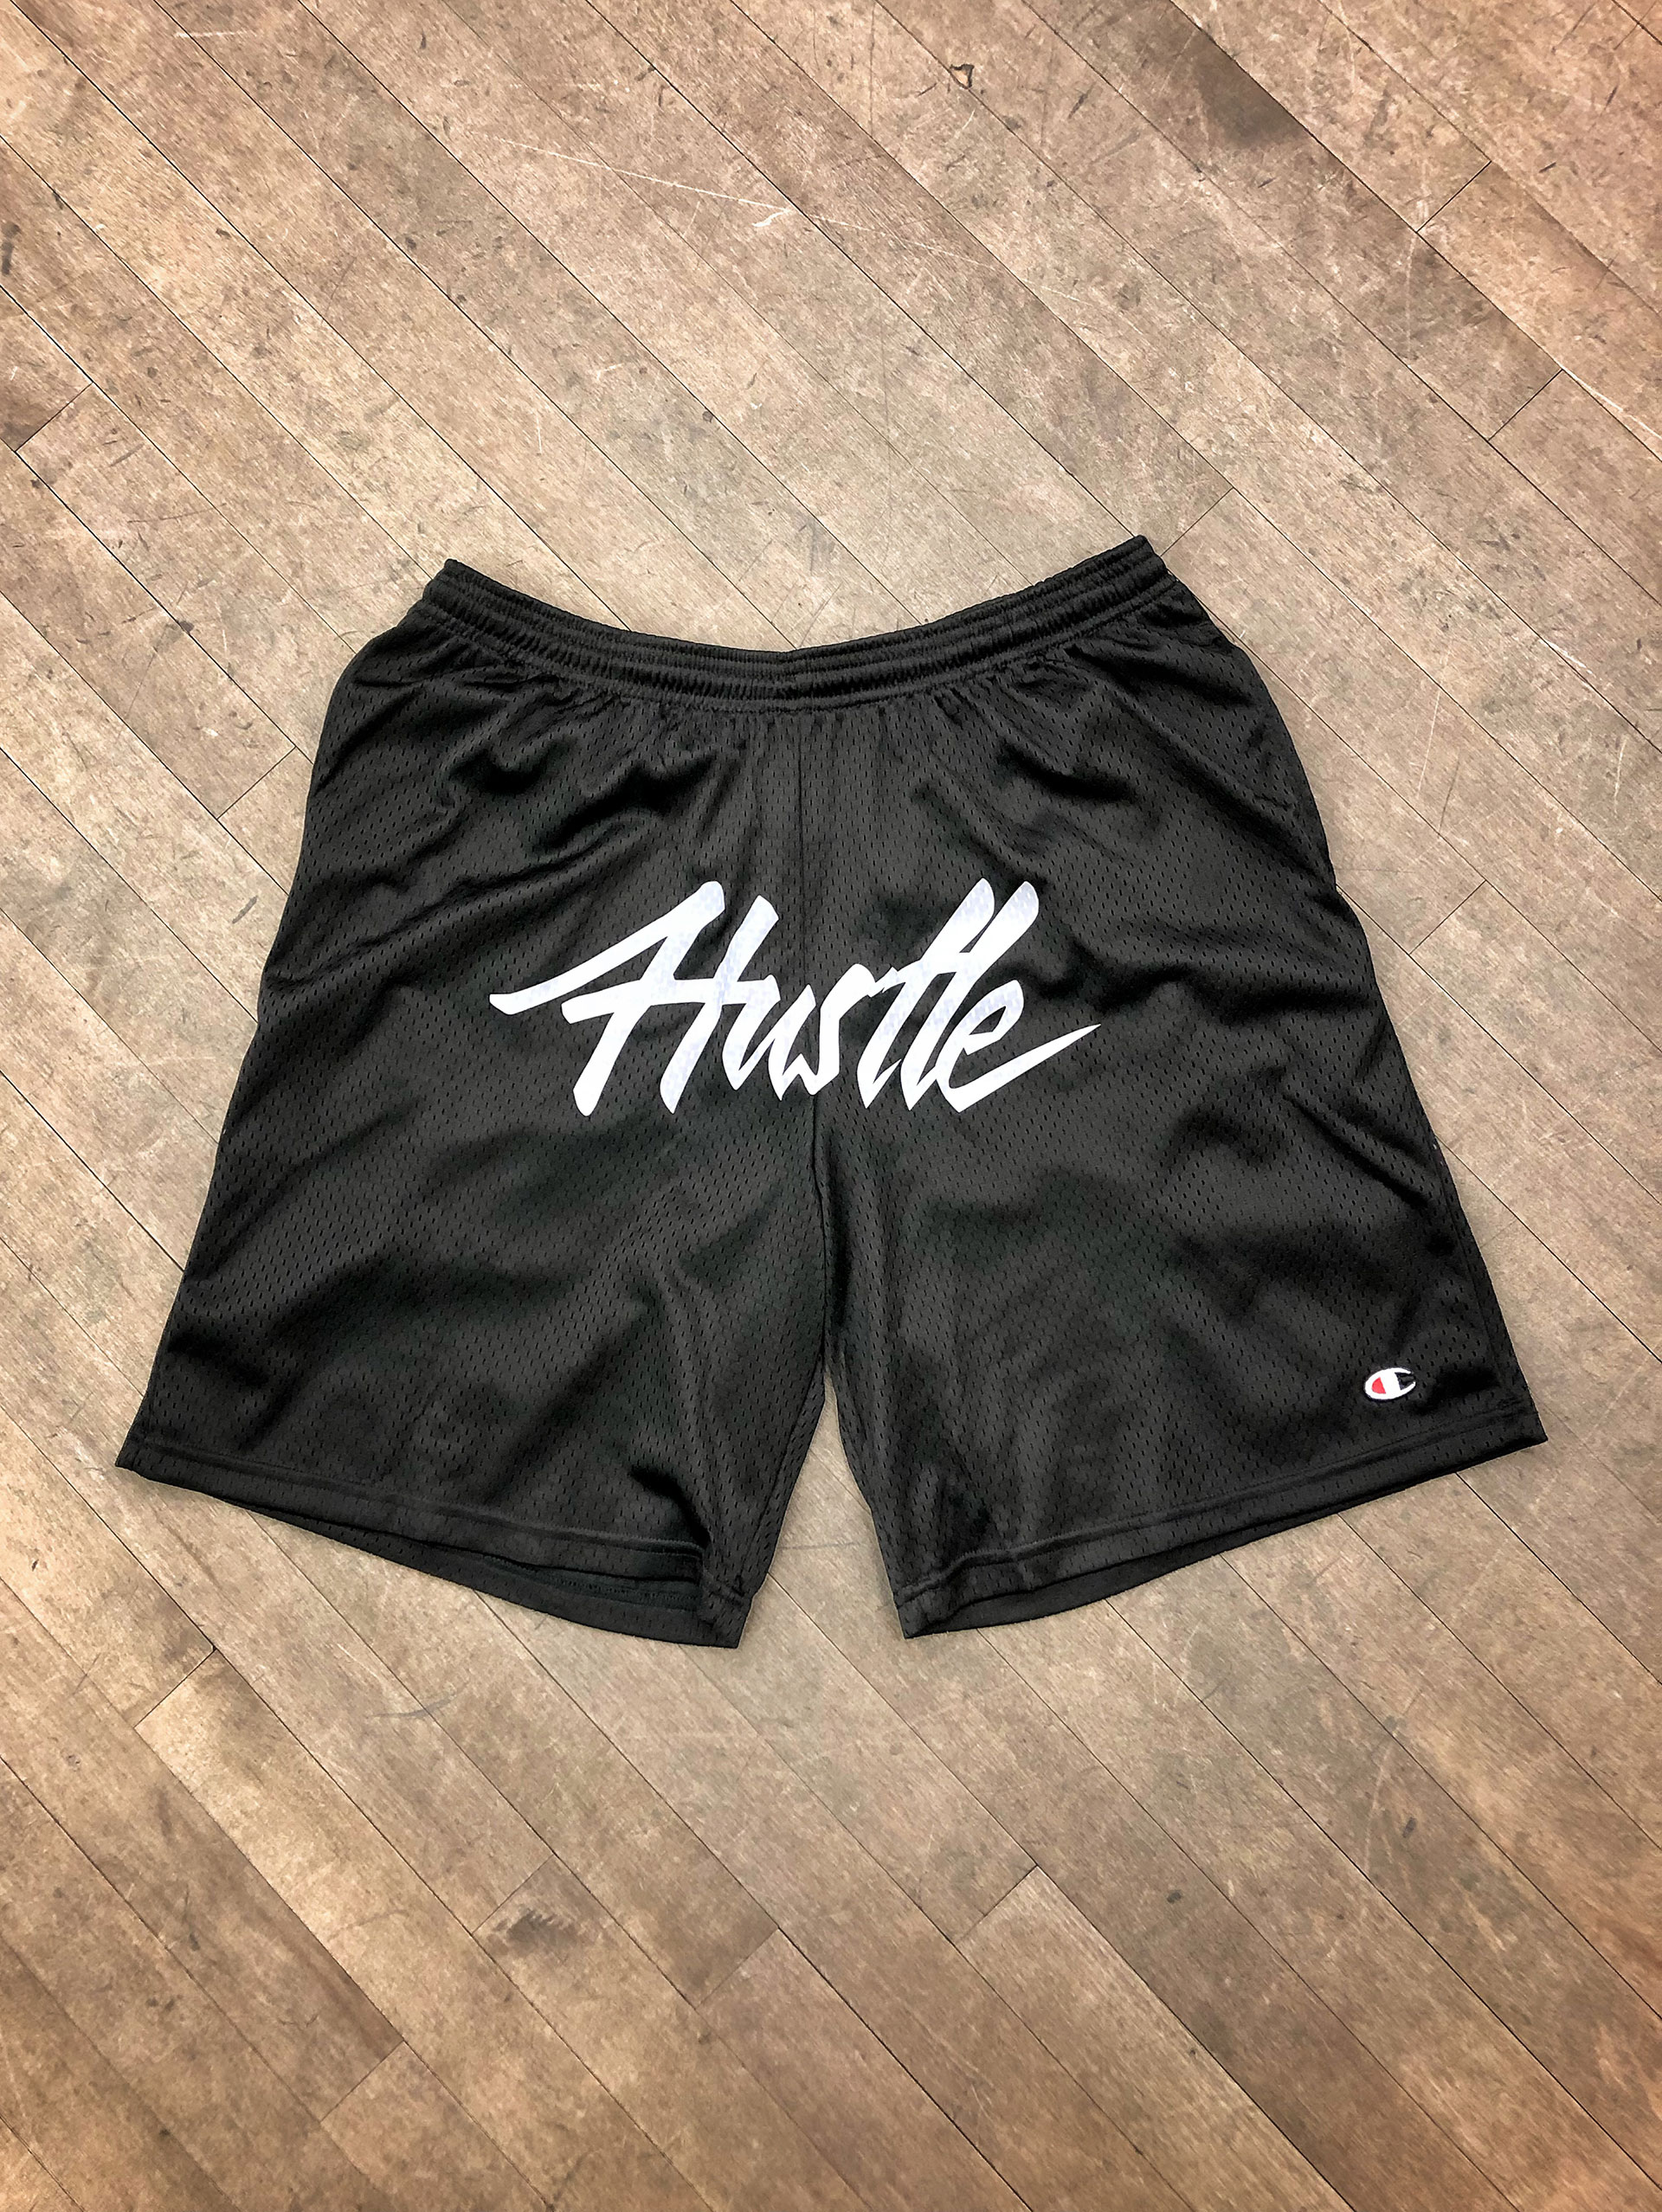 Legal Hustle Clothing basketball shorts